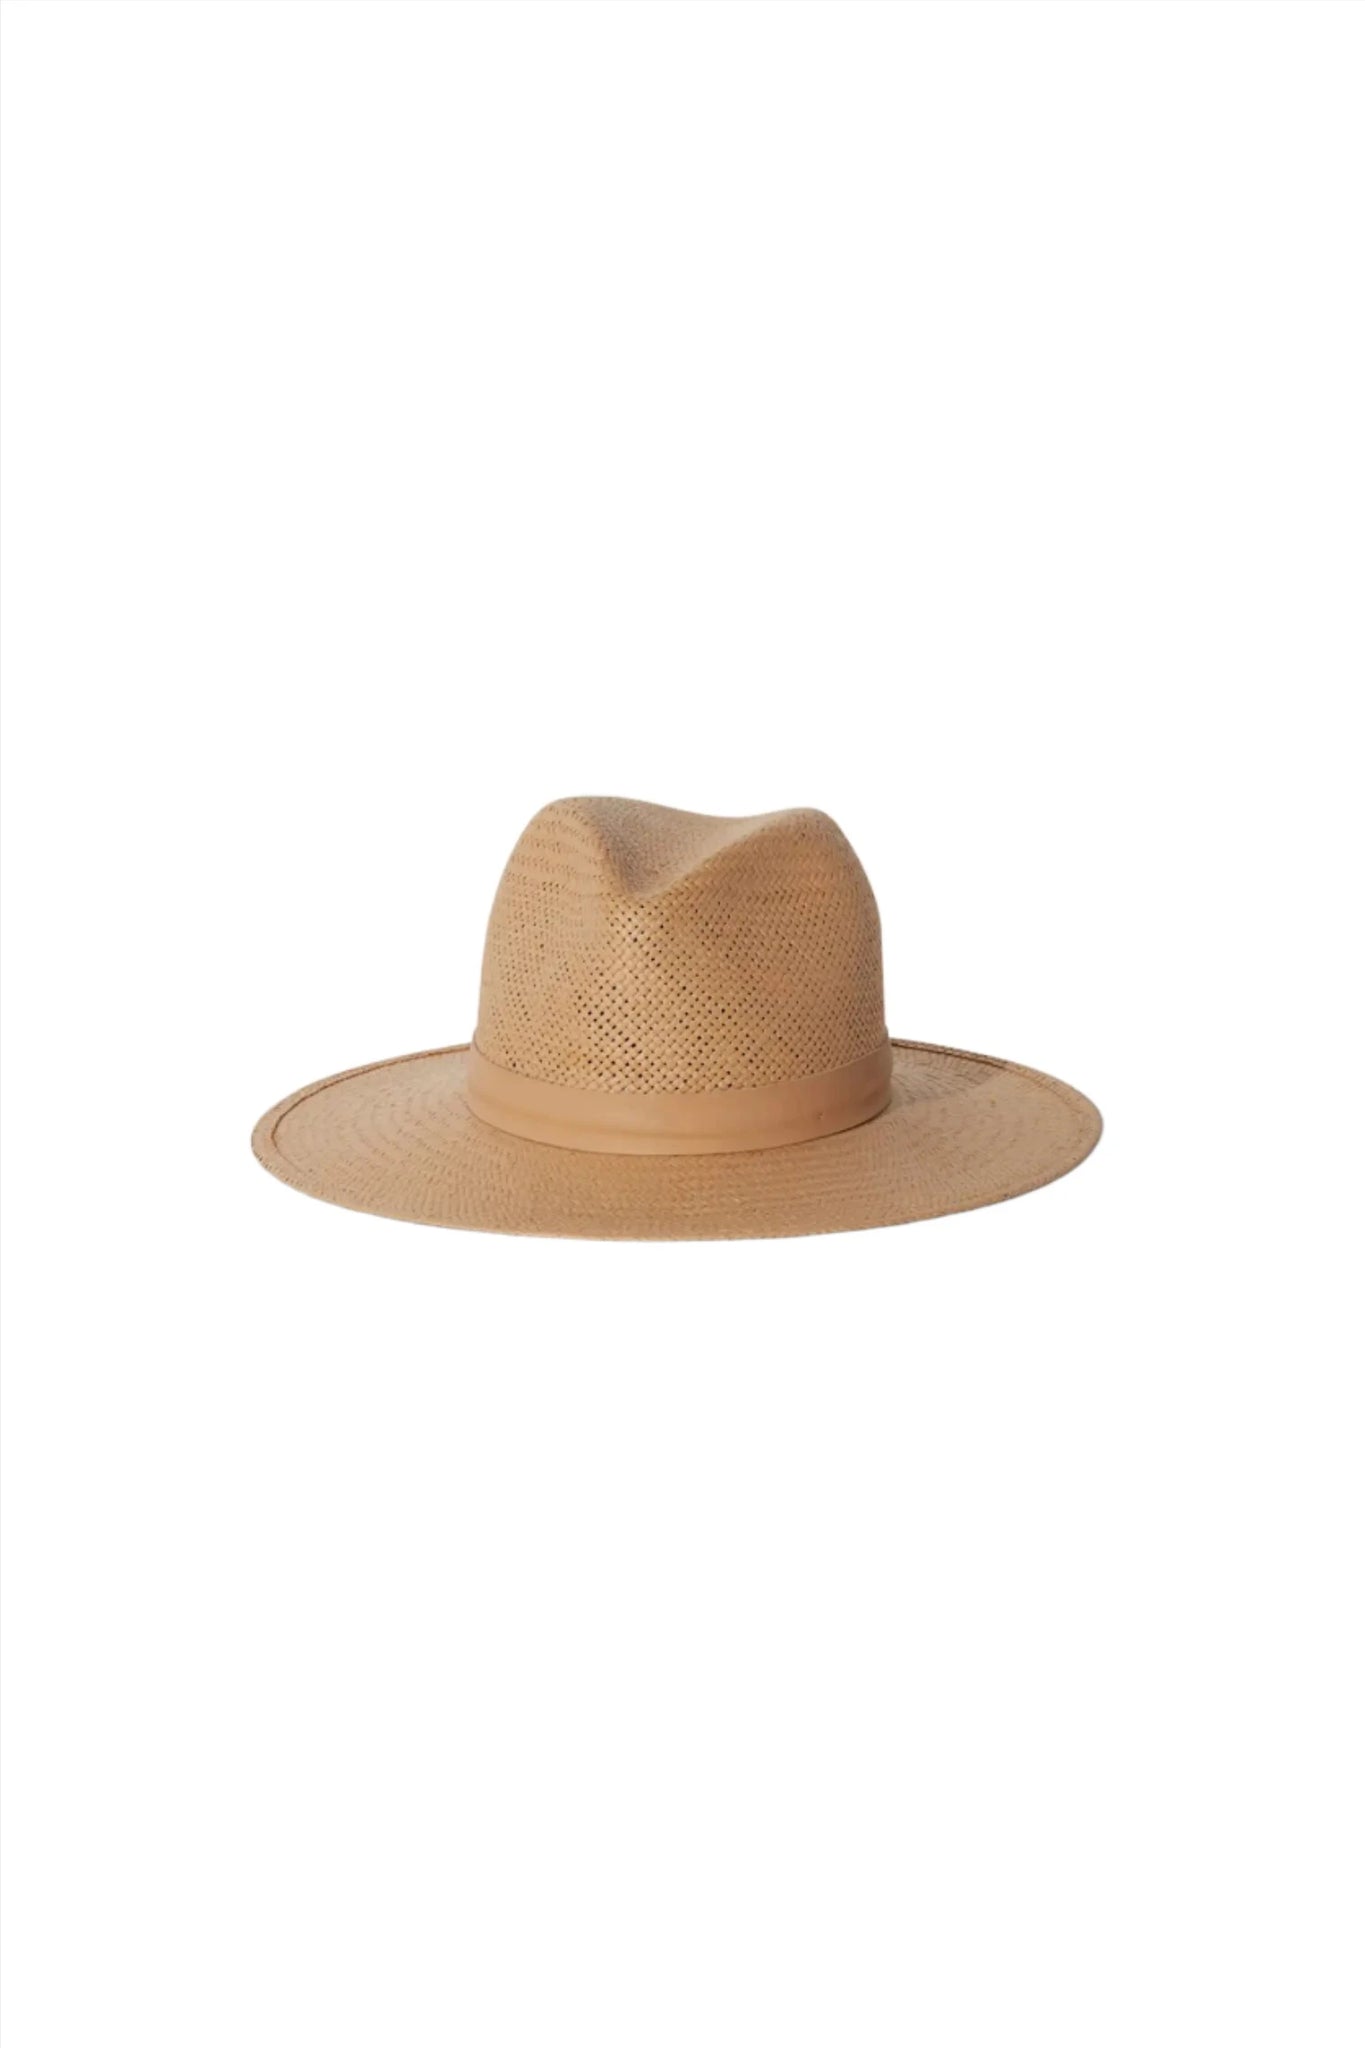 Simone Straw Hat in Sand